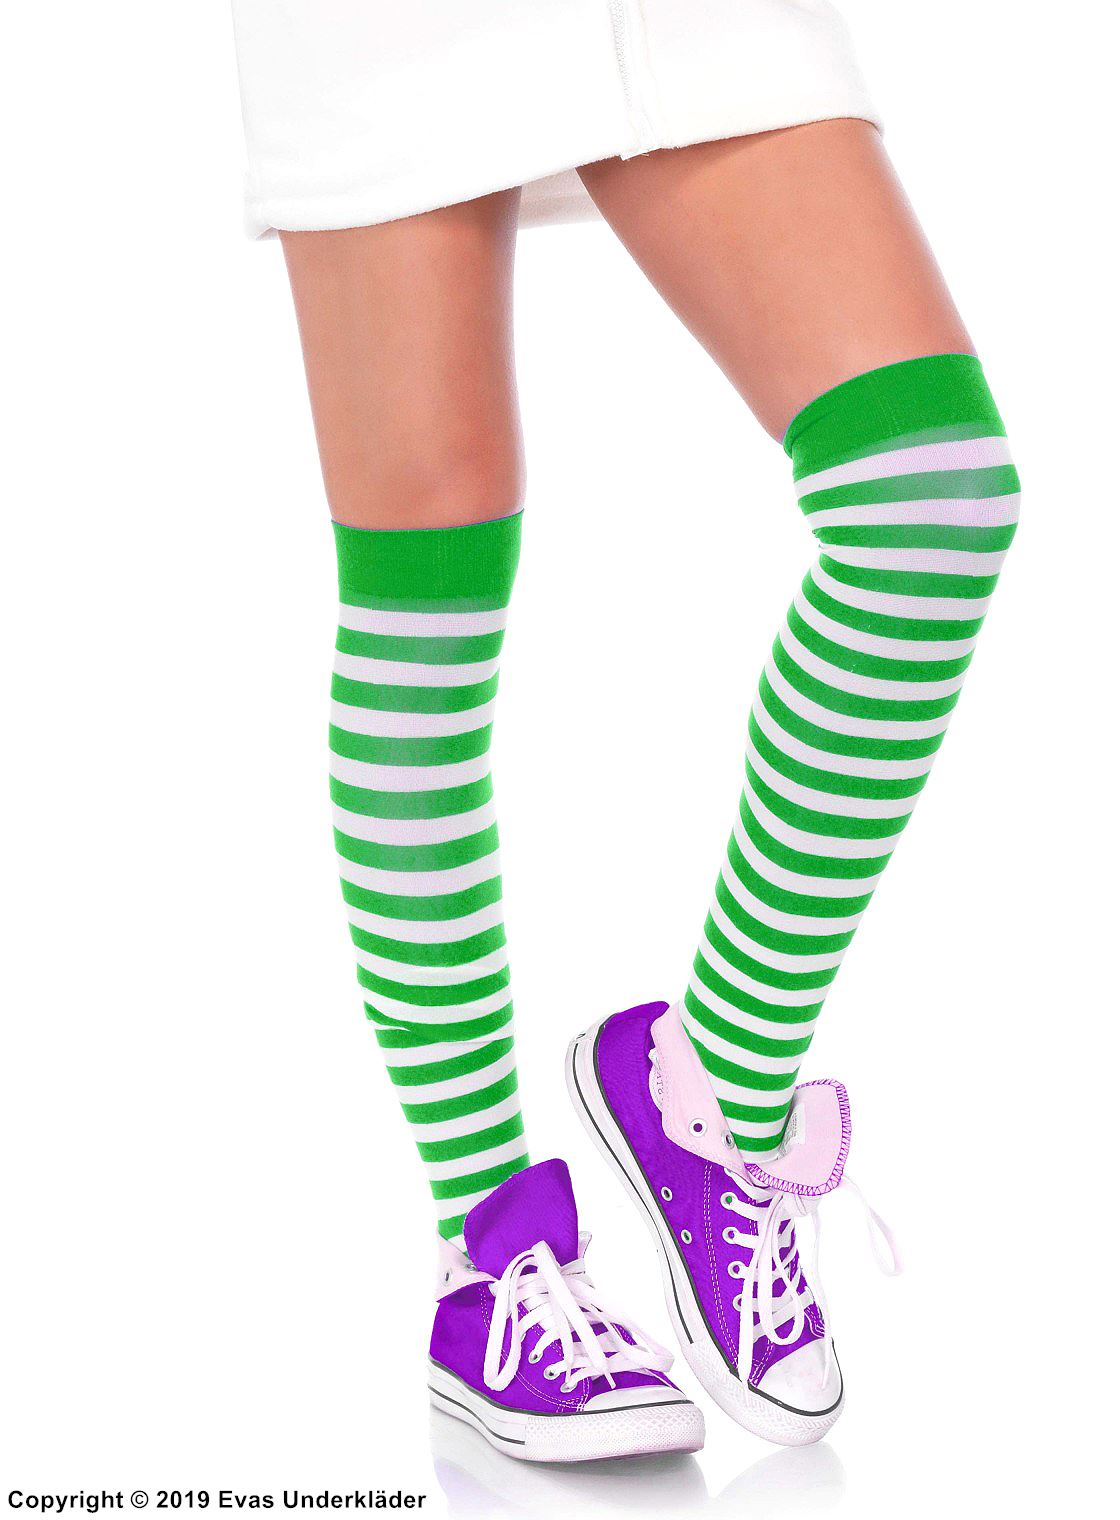 Thigh high stockings, nylon, colorful stripes